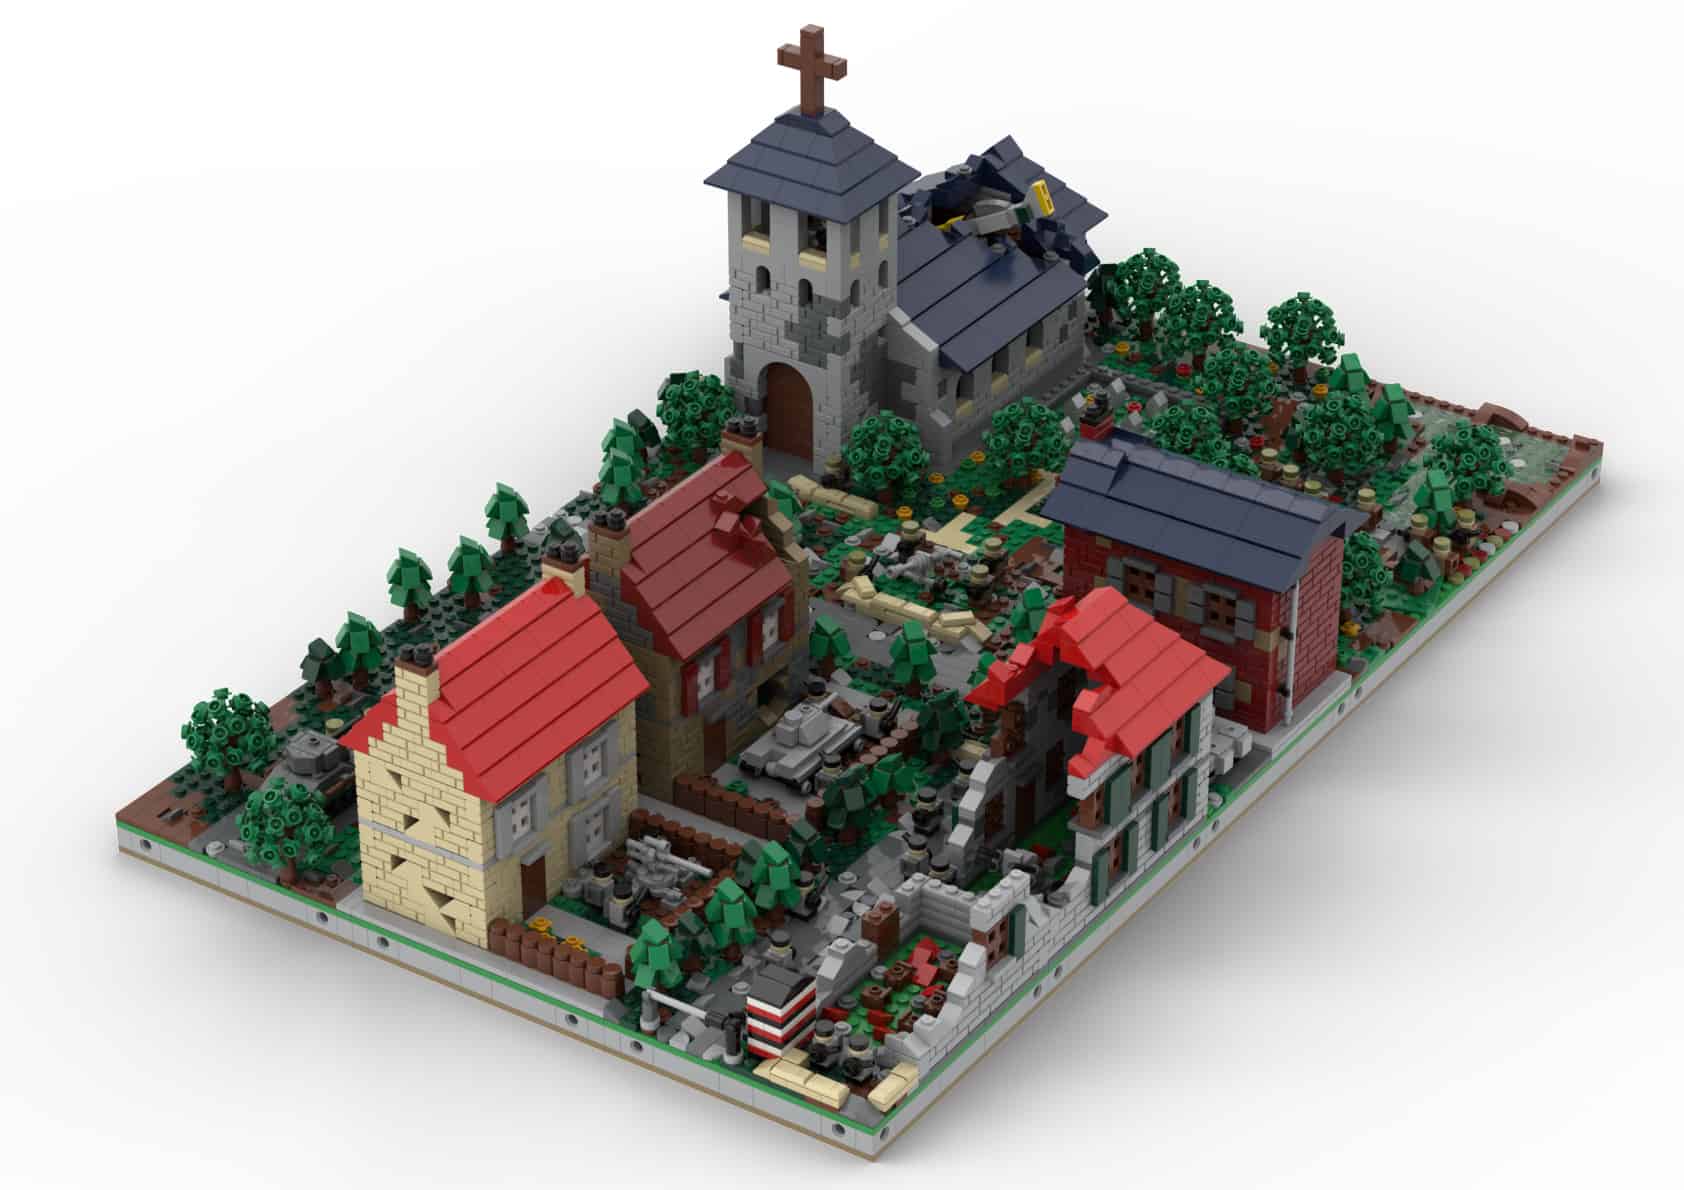 Lego ww2 microscale modular diorama instructions